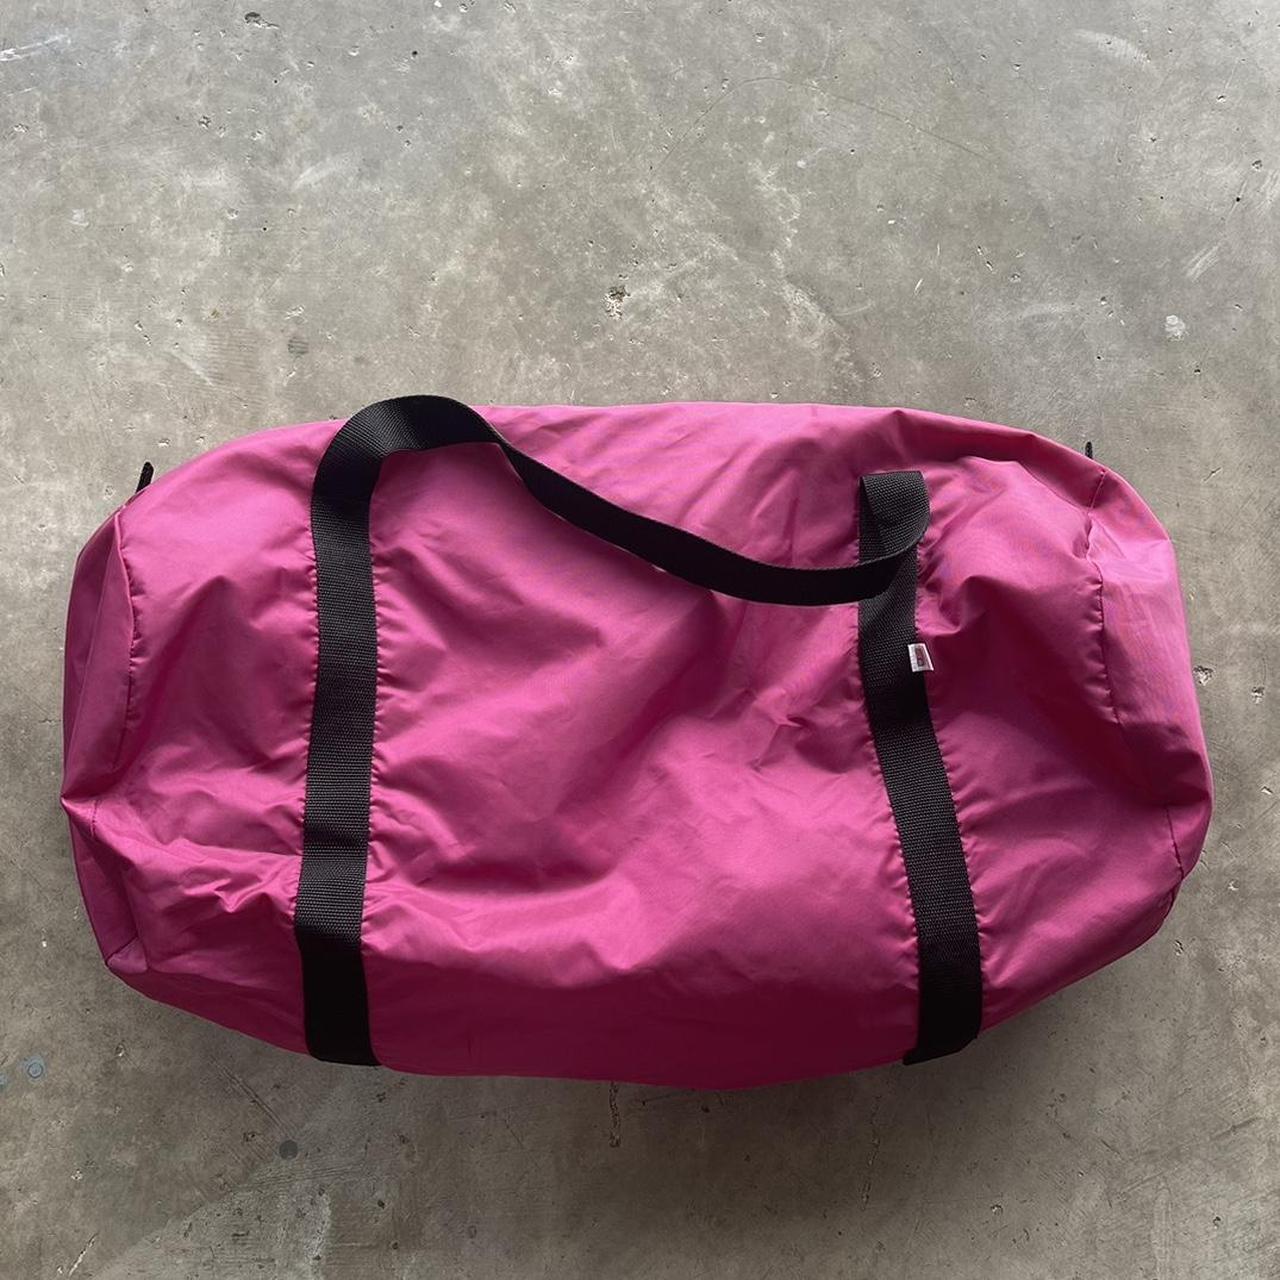 Supreme logo reflective duffel bag 8/10 condition, - Depop